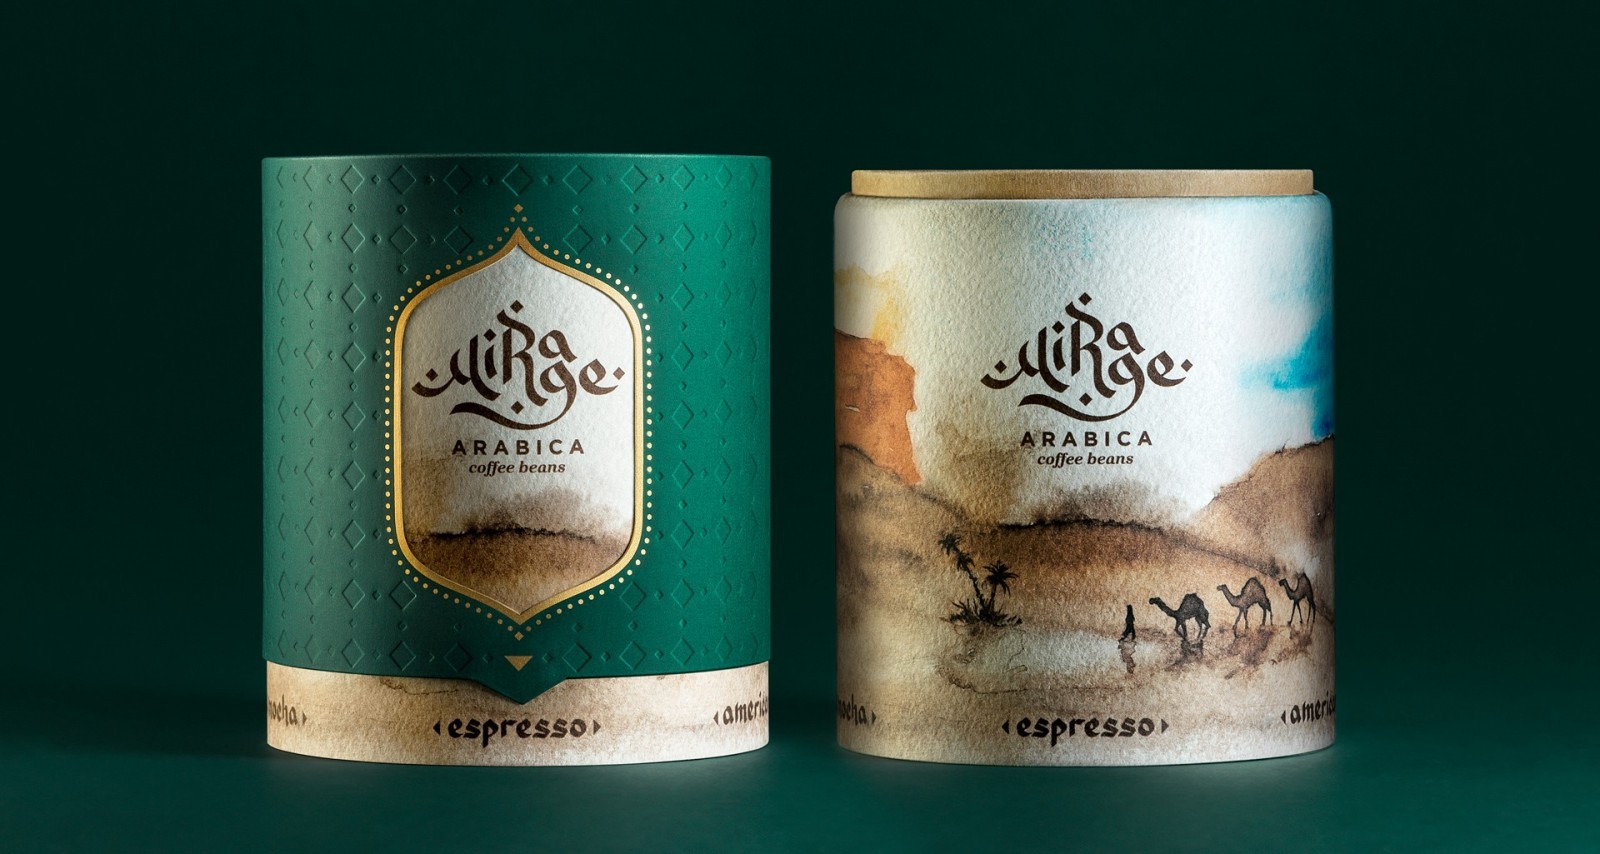 Karen Gevorgyan, Armenak Grigoryan, Maria Gevorgyan – Mirage Arabica Coffee (concept)